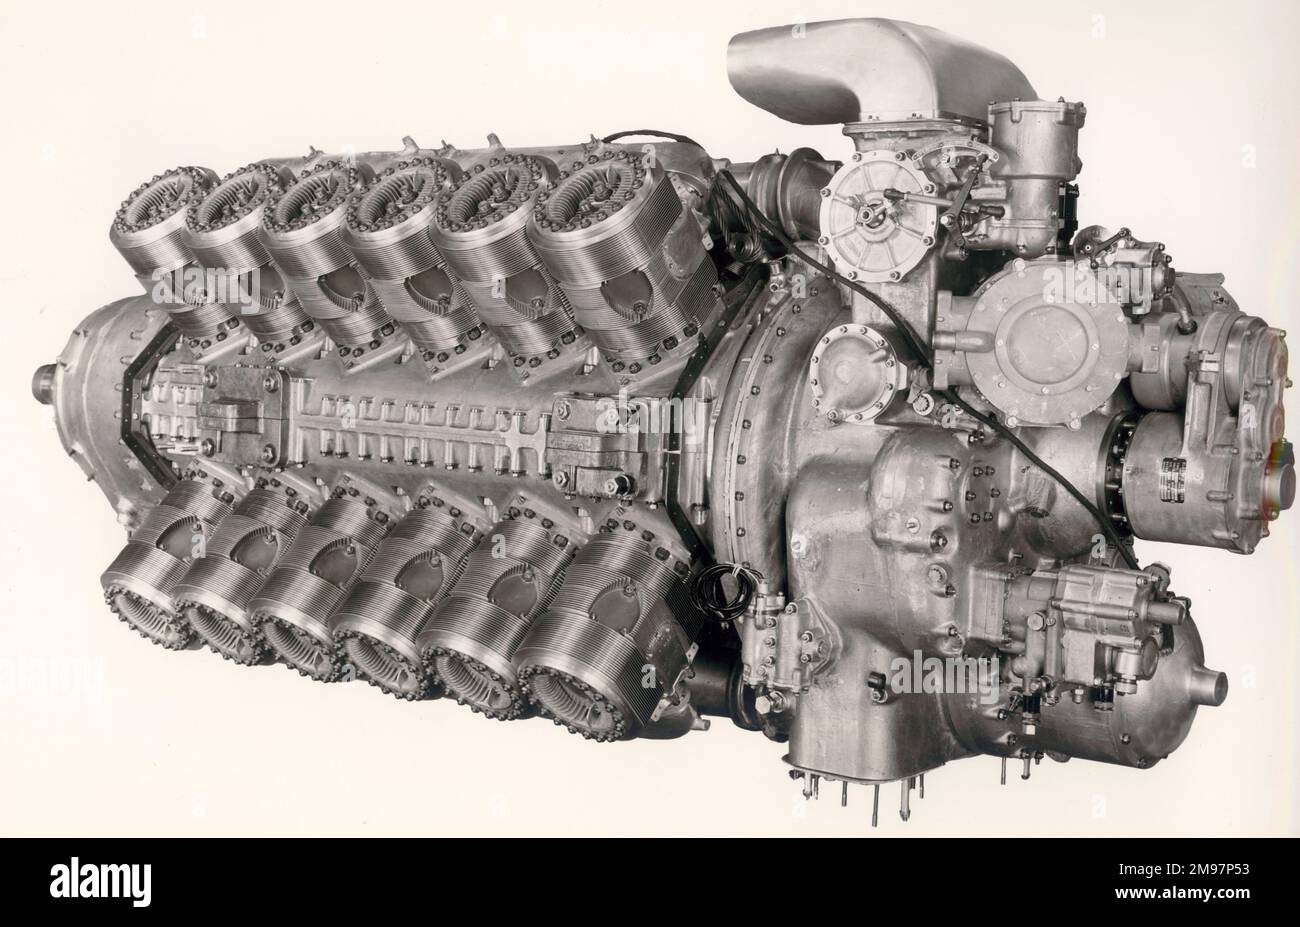 Rolls-Royce Pennine 24-cylinder, air-cooled, X-block, sleeve-valve engine  Stock Photo - Alamy